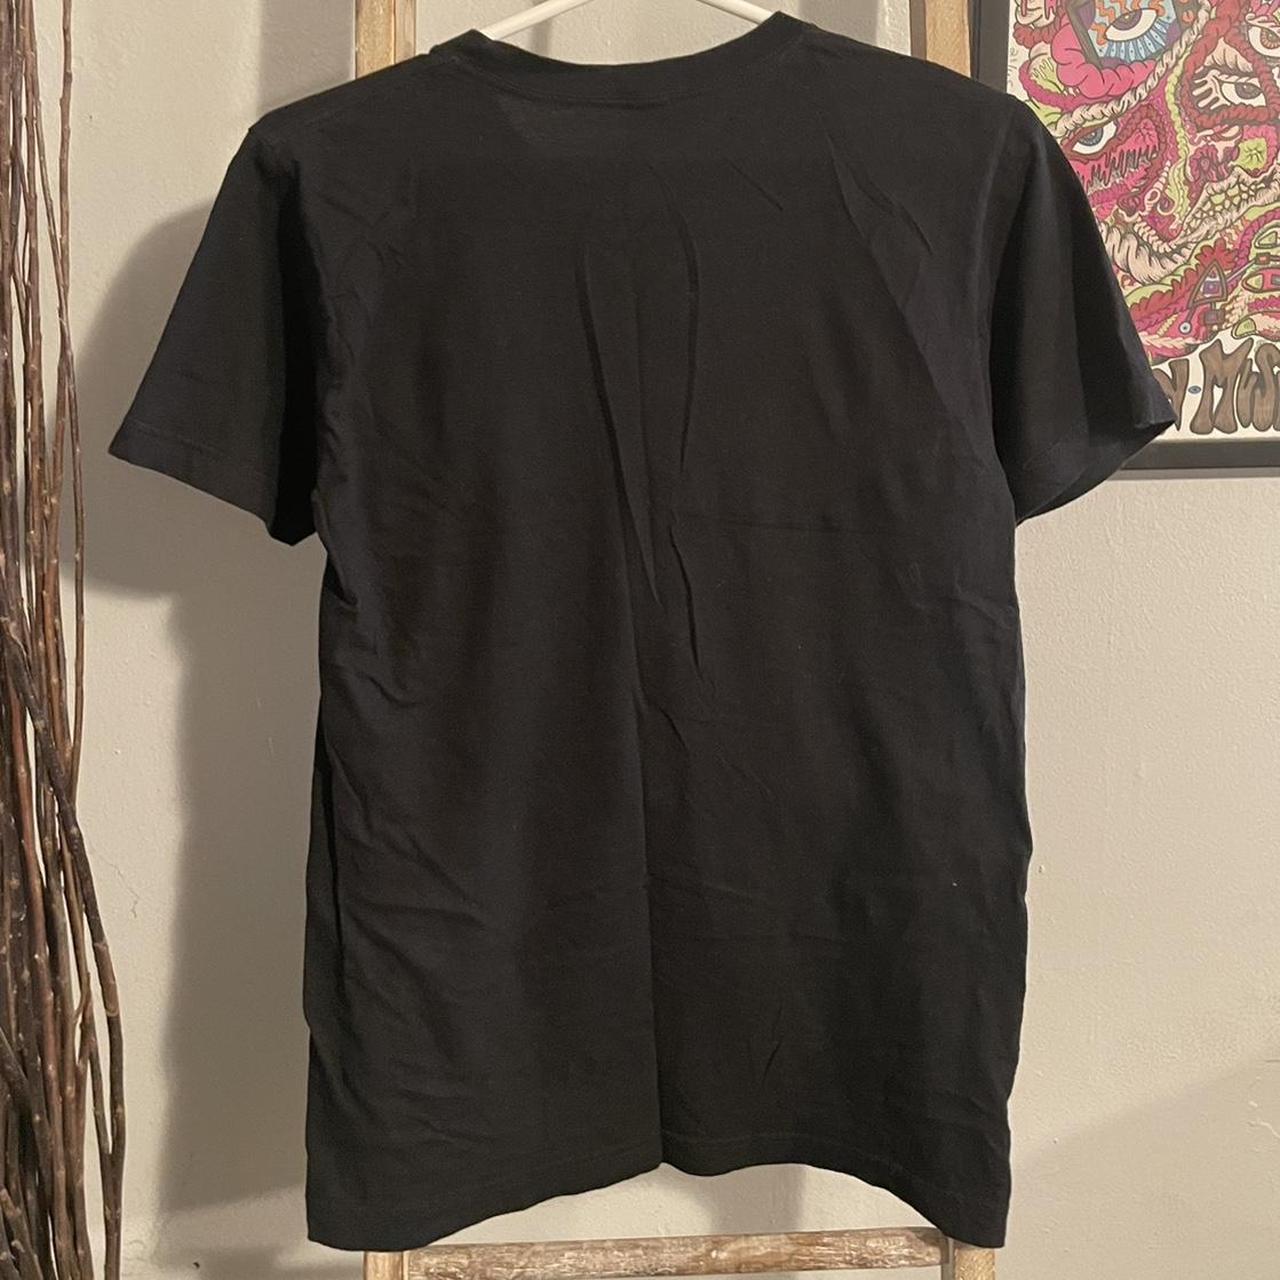 American Apparel Men's Black T-shirt (2)